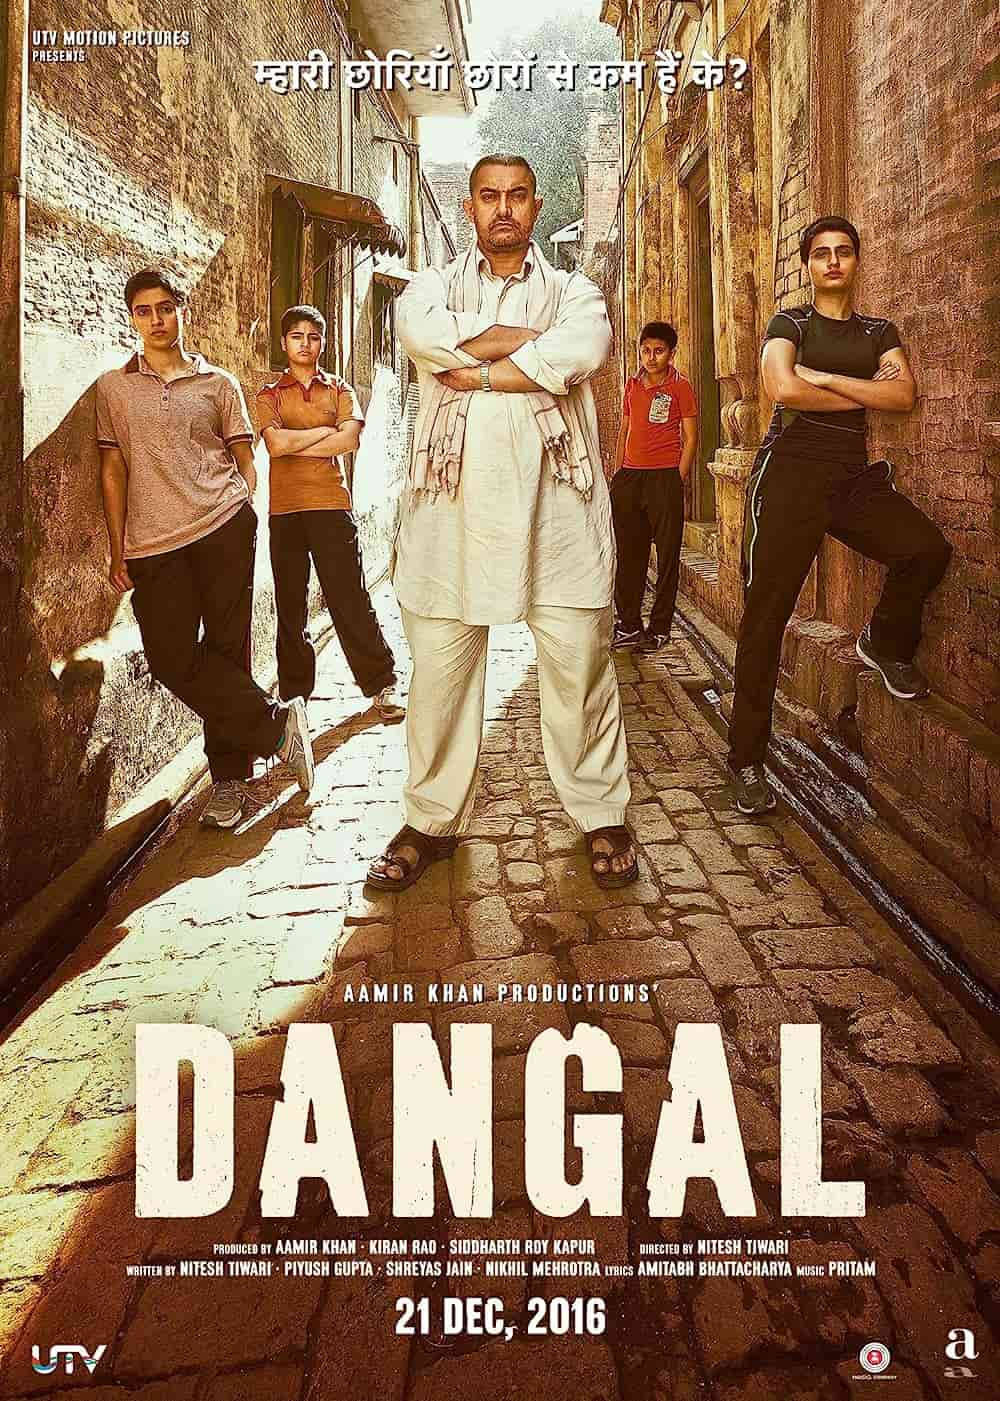 Must Watch Bollywood Movie: Dangal